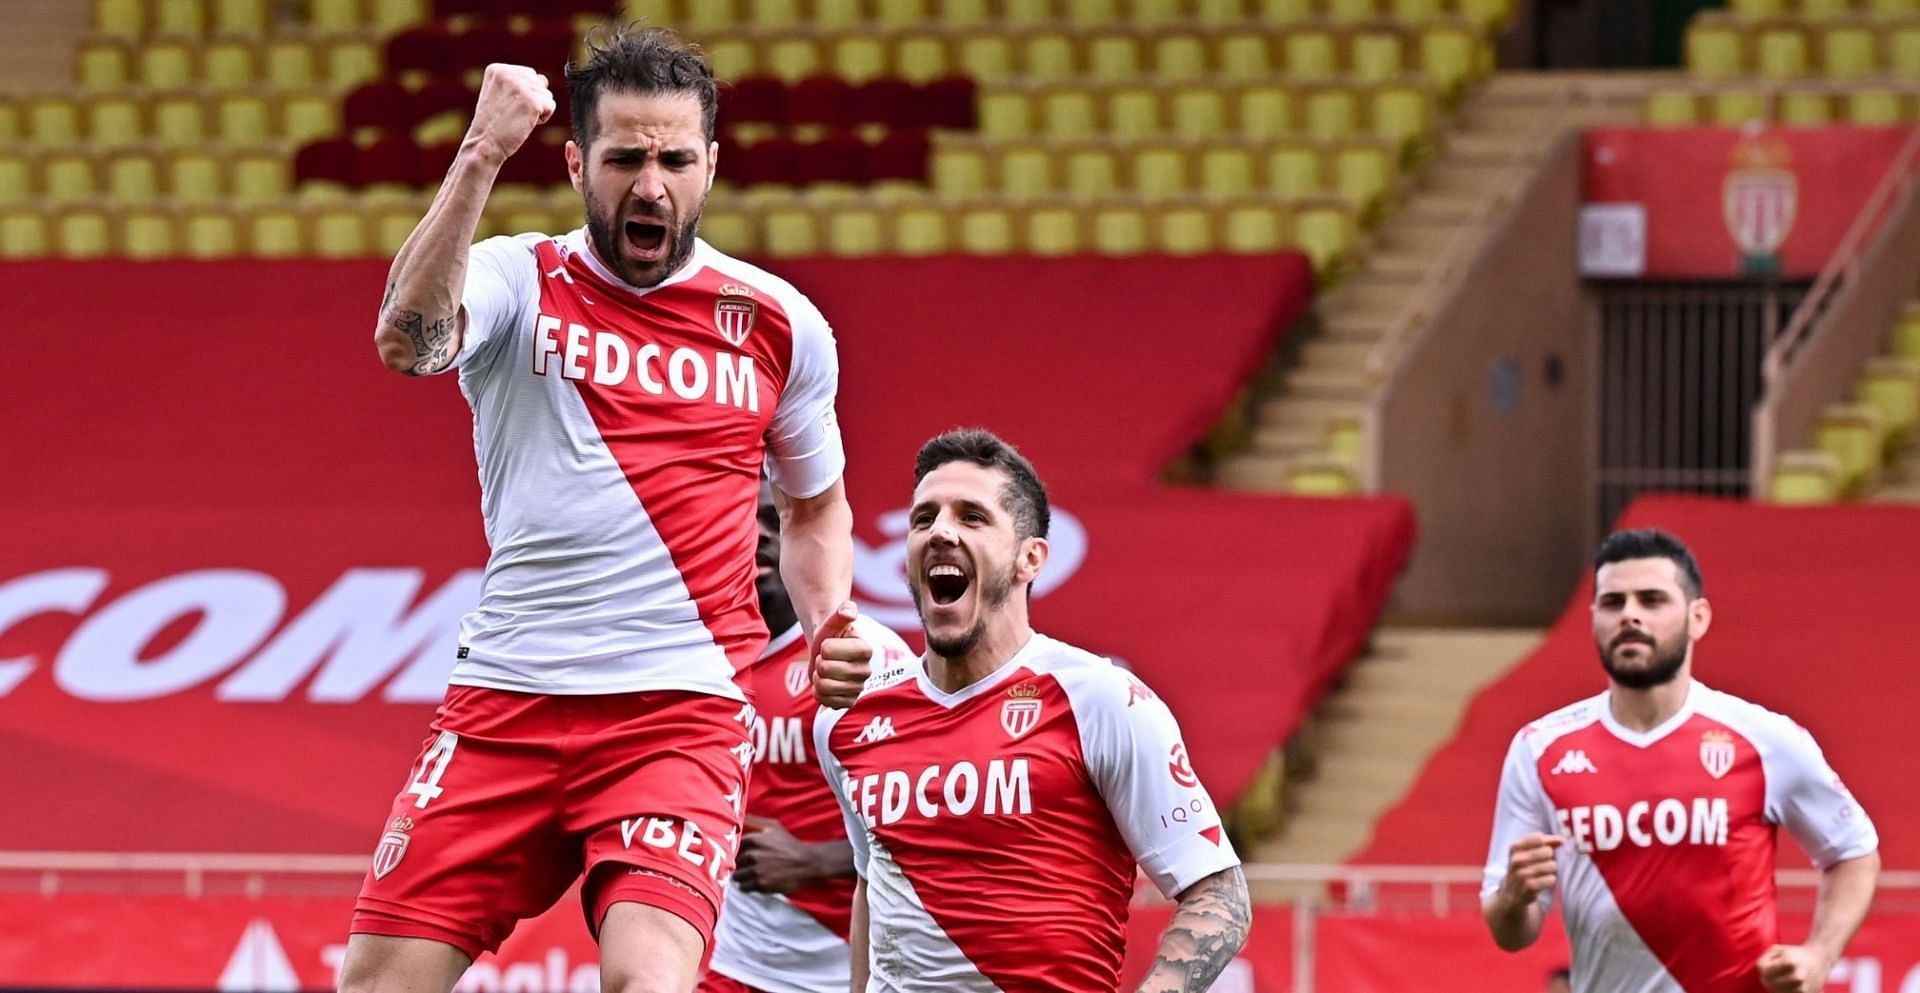 Monaco face Quevilly-Rouen in their Coupe de France fixture on Sunday